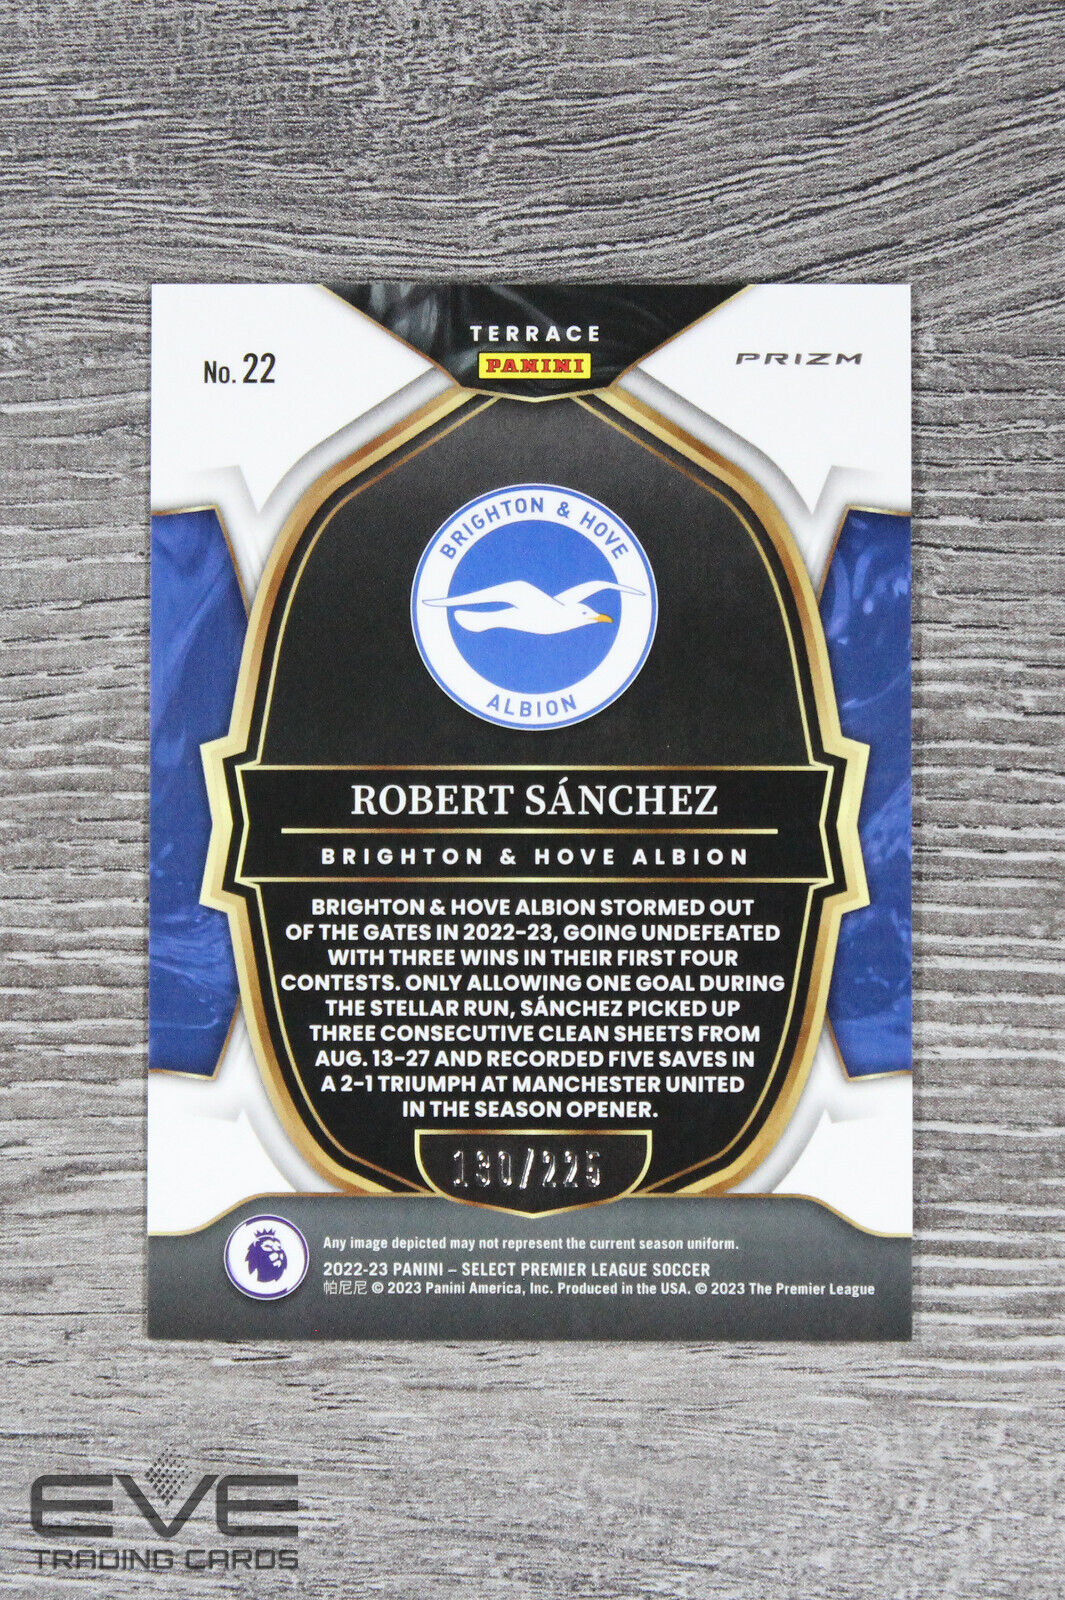 2022-23 Panini Select EPL Soccer Card #22 Robert Sanchez Camo Prizm /225 NM/M